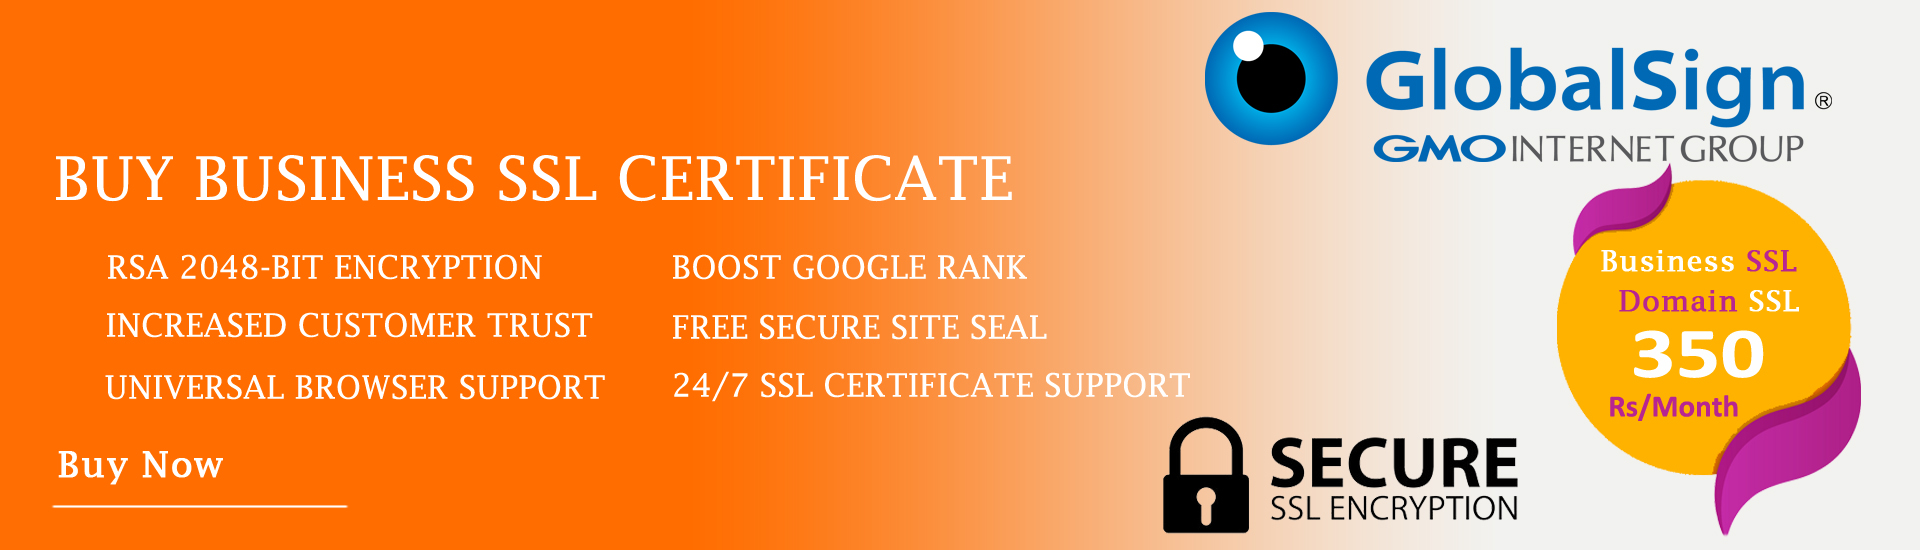 buy business ssl certificate